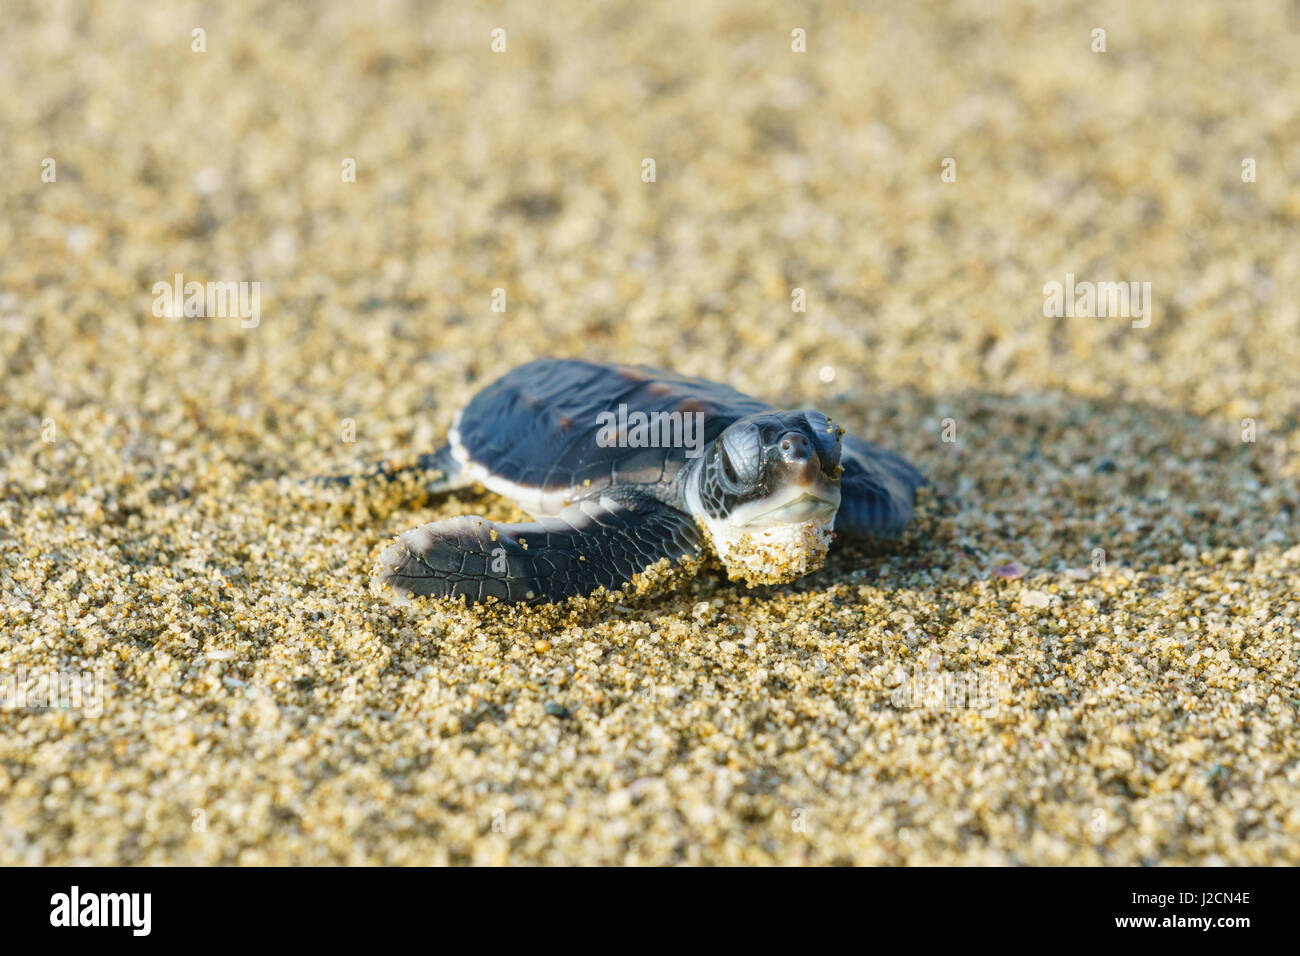 Indonesia, Java Timur, Kabany Banyuwangi, Meru Betiri National Park, turtle in the sand on the beach Stock Photo